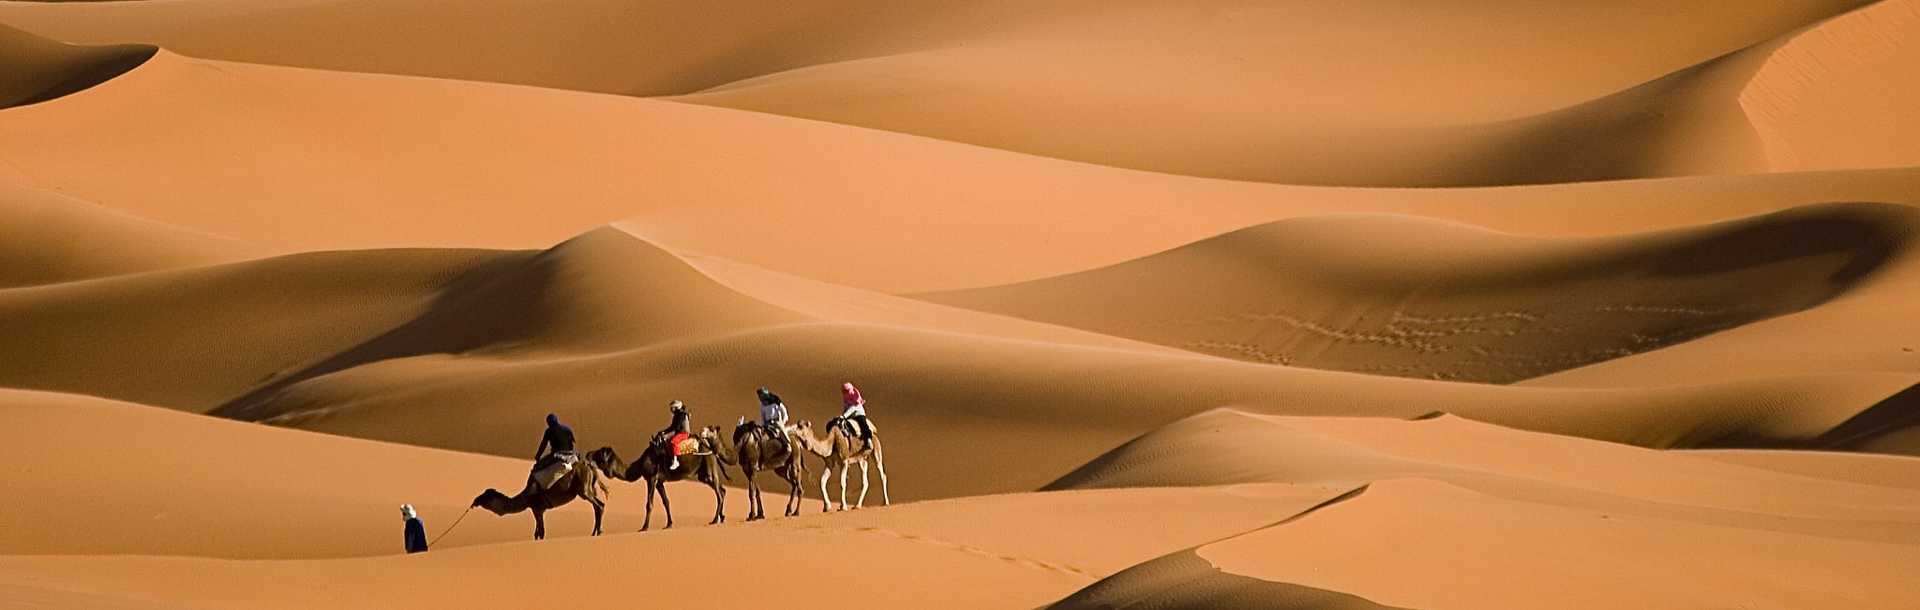 Camel riding in the Sahara Desert of Morocco.